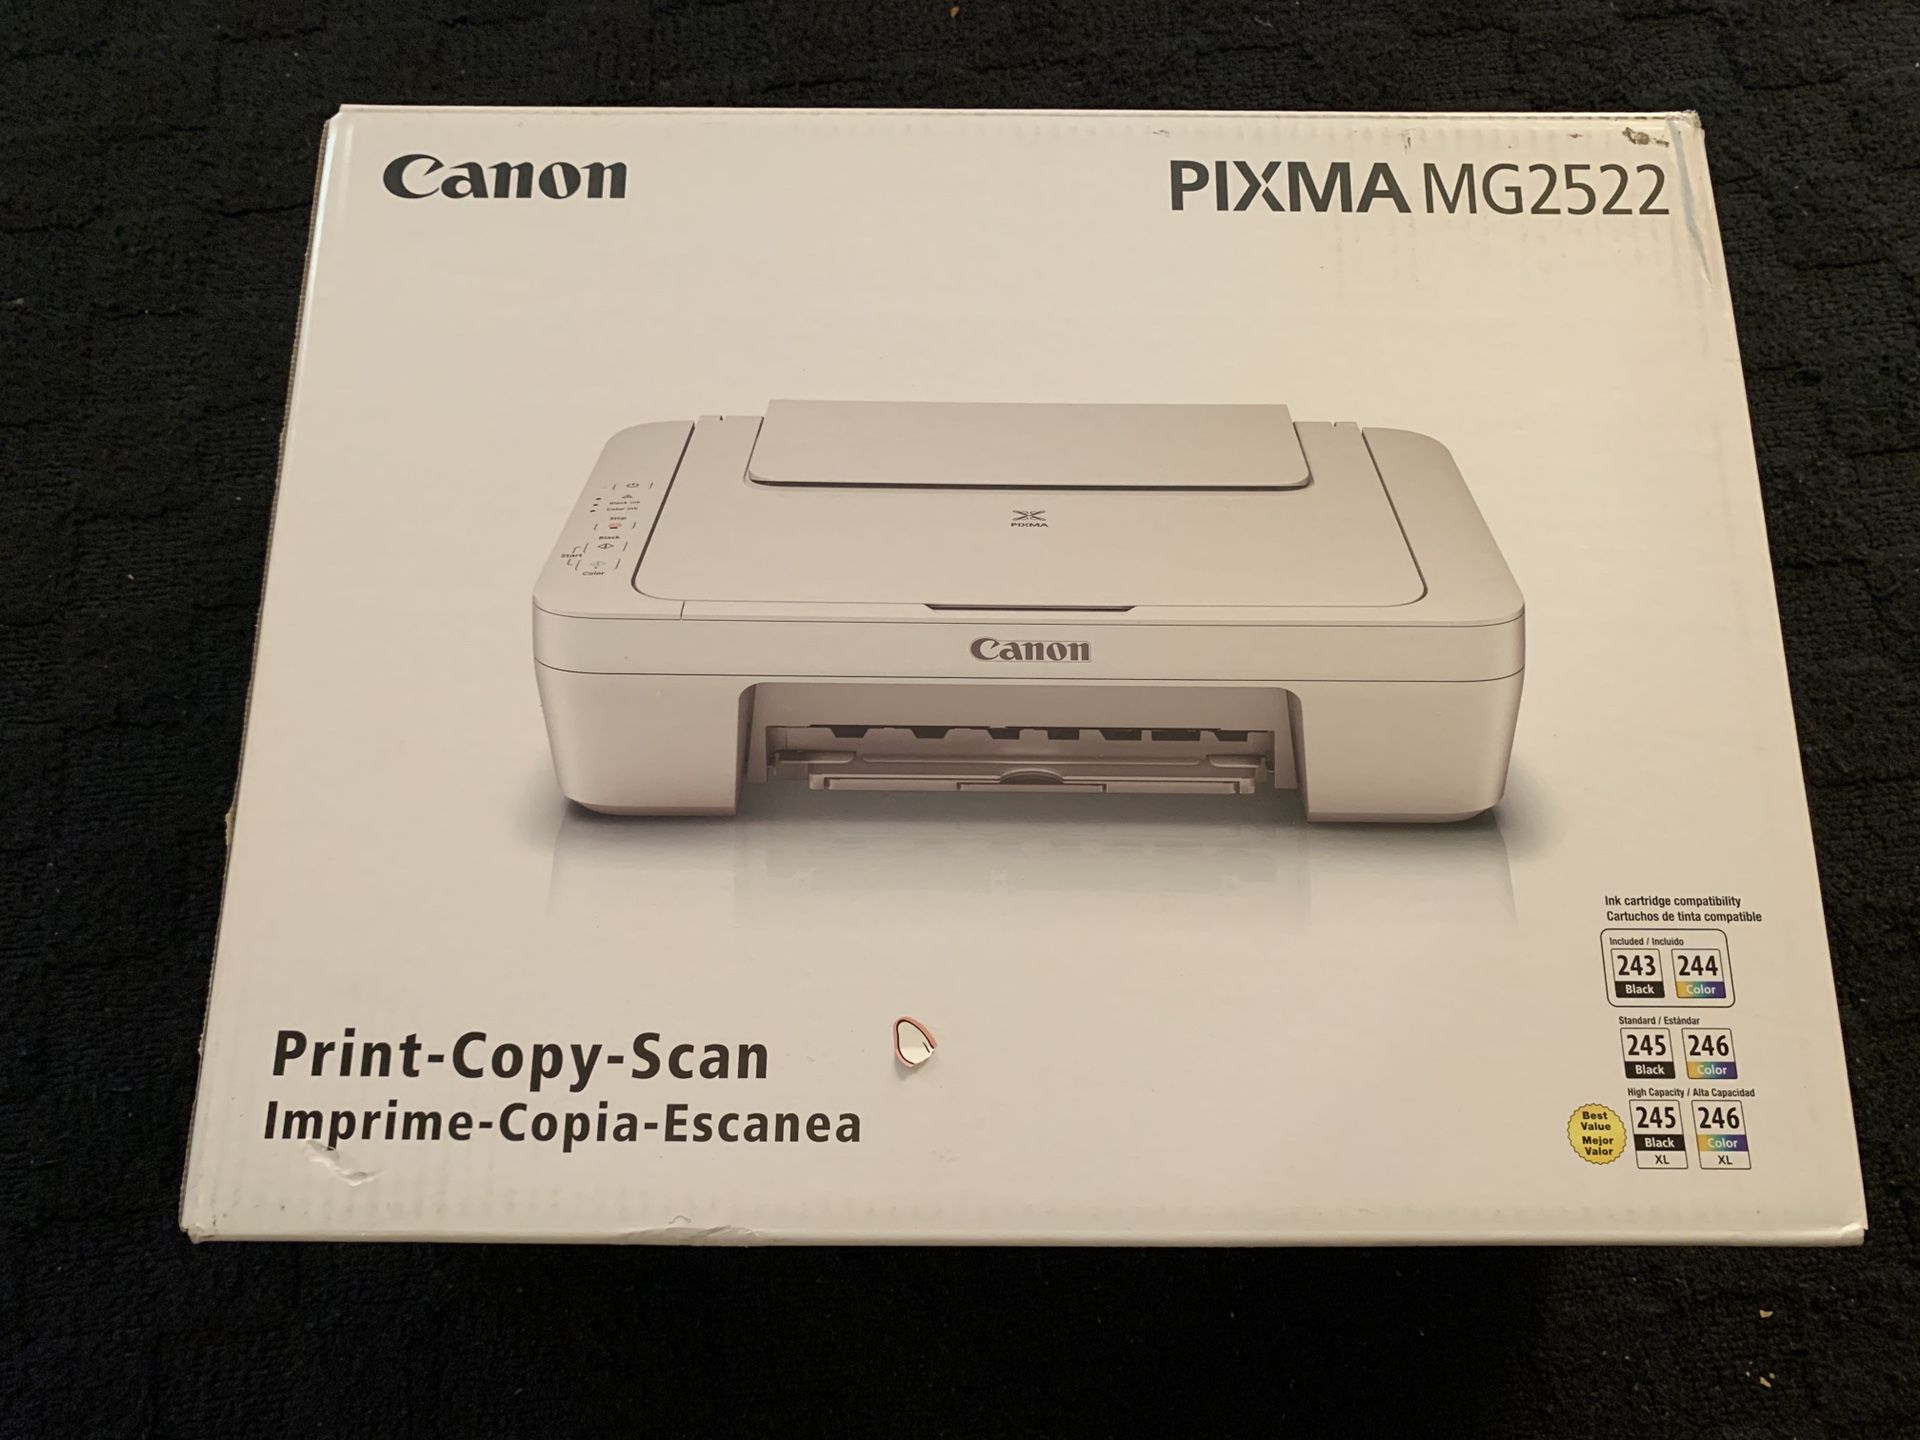 New canon pixma mg2522 printer does sale